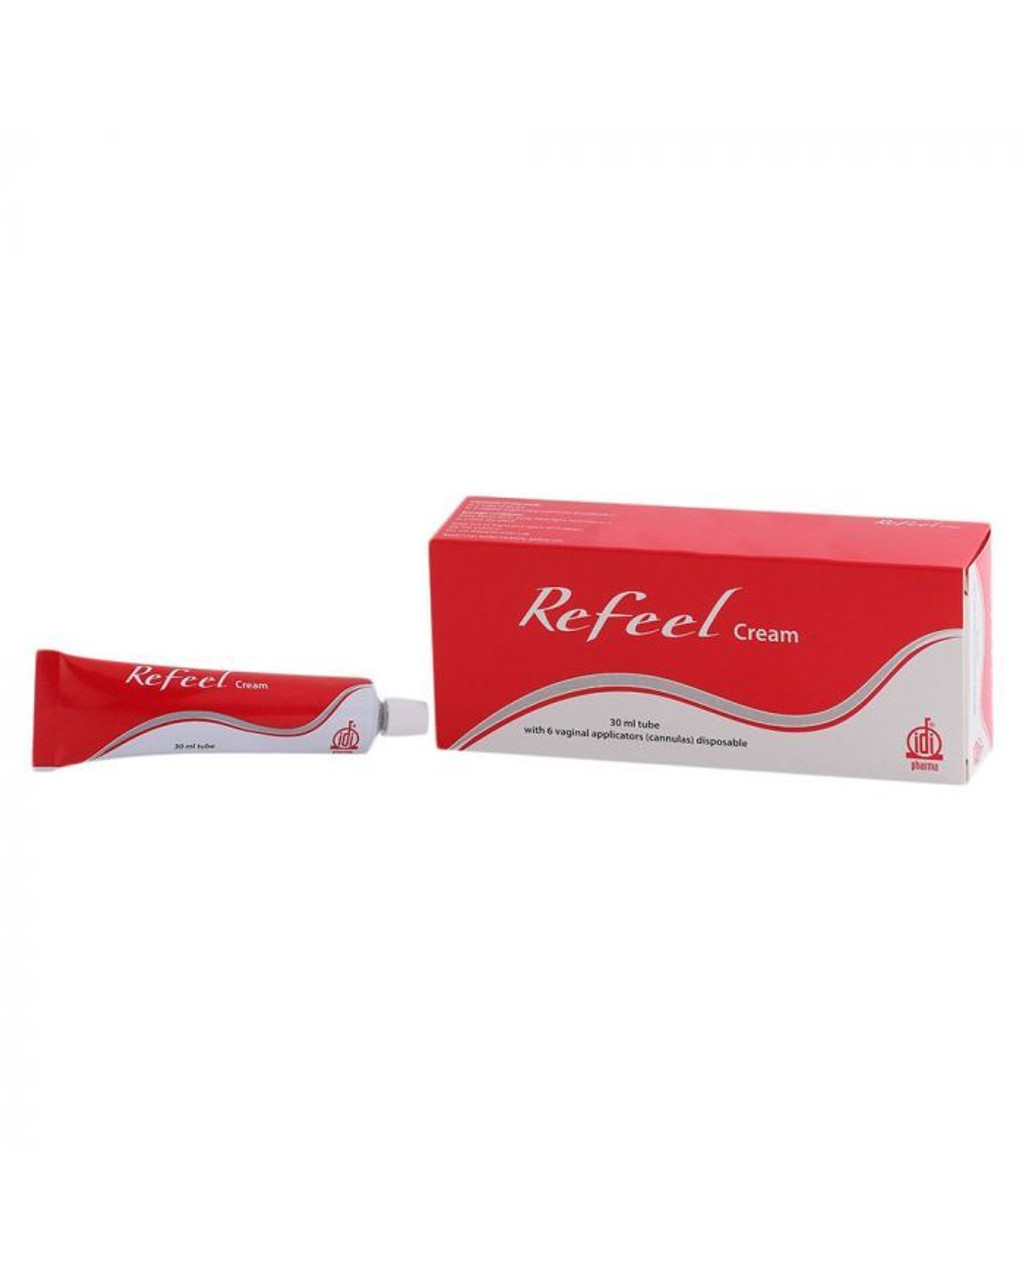 Laboratoires Fumouze - Replens Vaginal Gel 8 Single-Use Doses